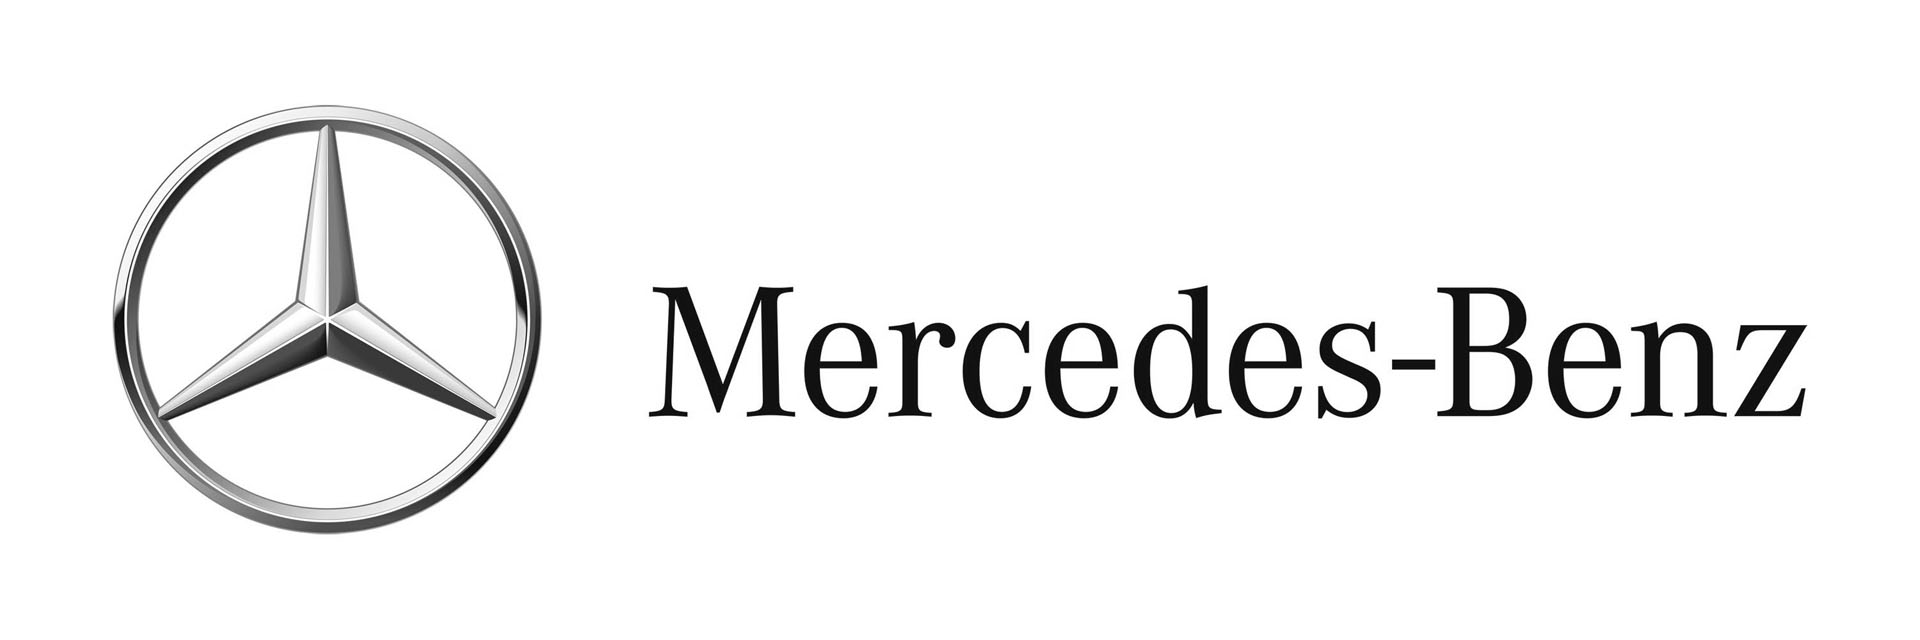 Logo De La Marque Mercedes Benz. Mercedes Benz Logo Sur Une